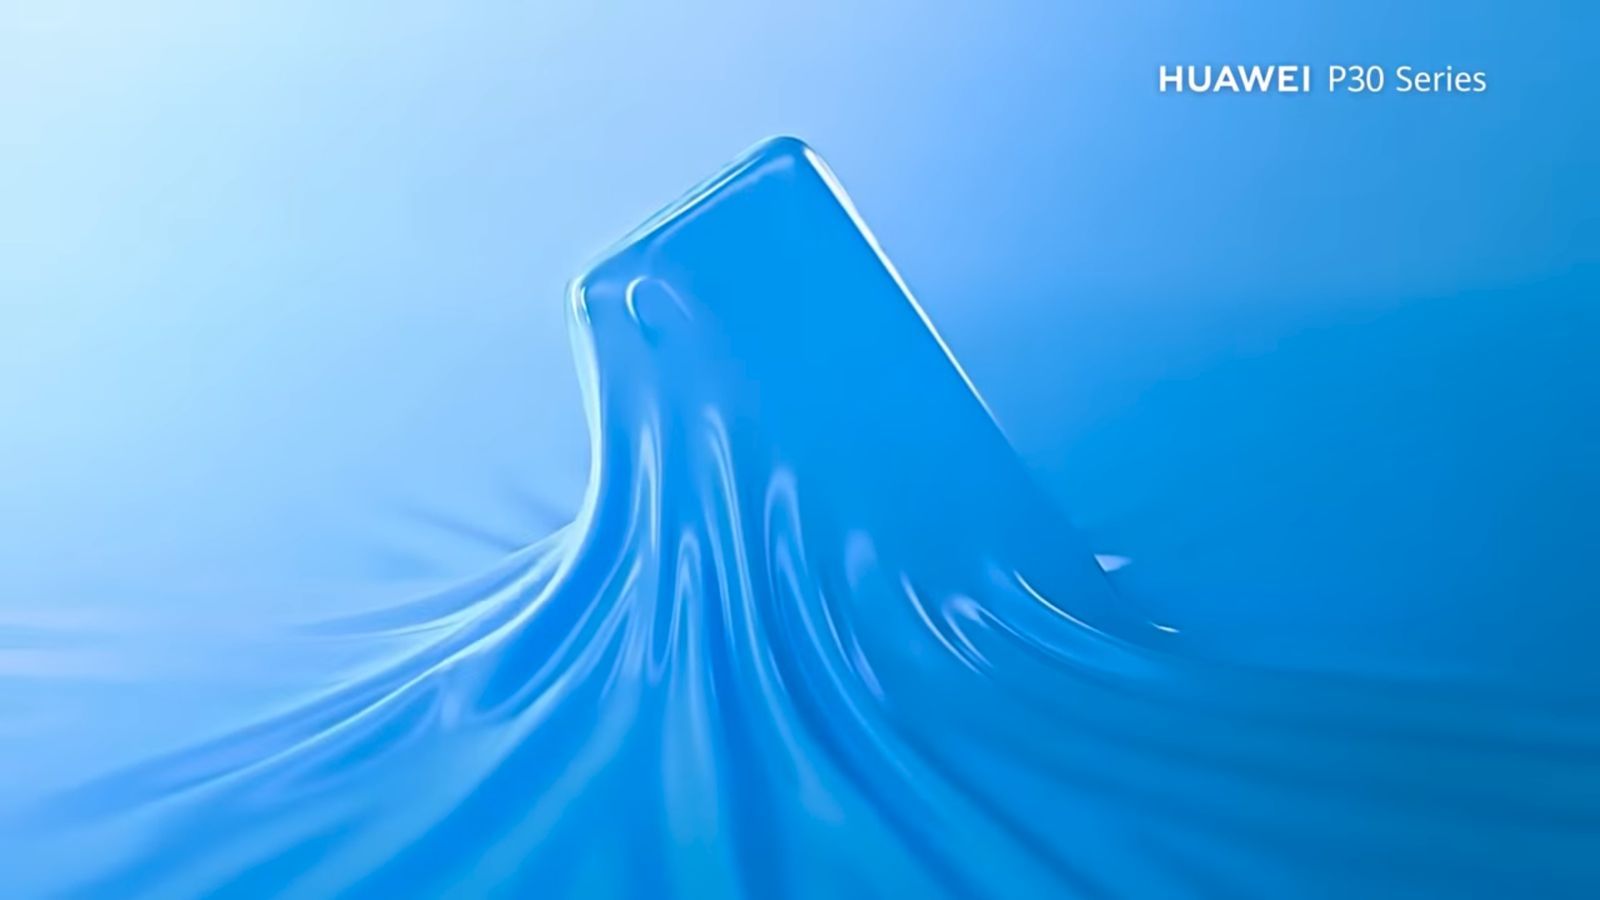 Huawei ปล่อยทีเซอร์โปรโมท Huawei P30 ดูดีๆ มีบอกใบ้อะไรบ้าง